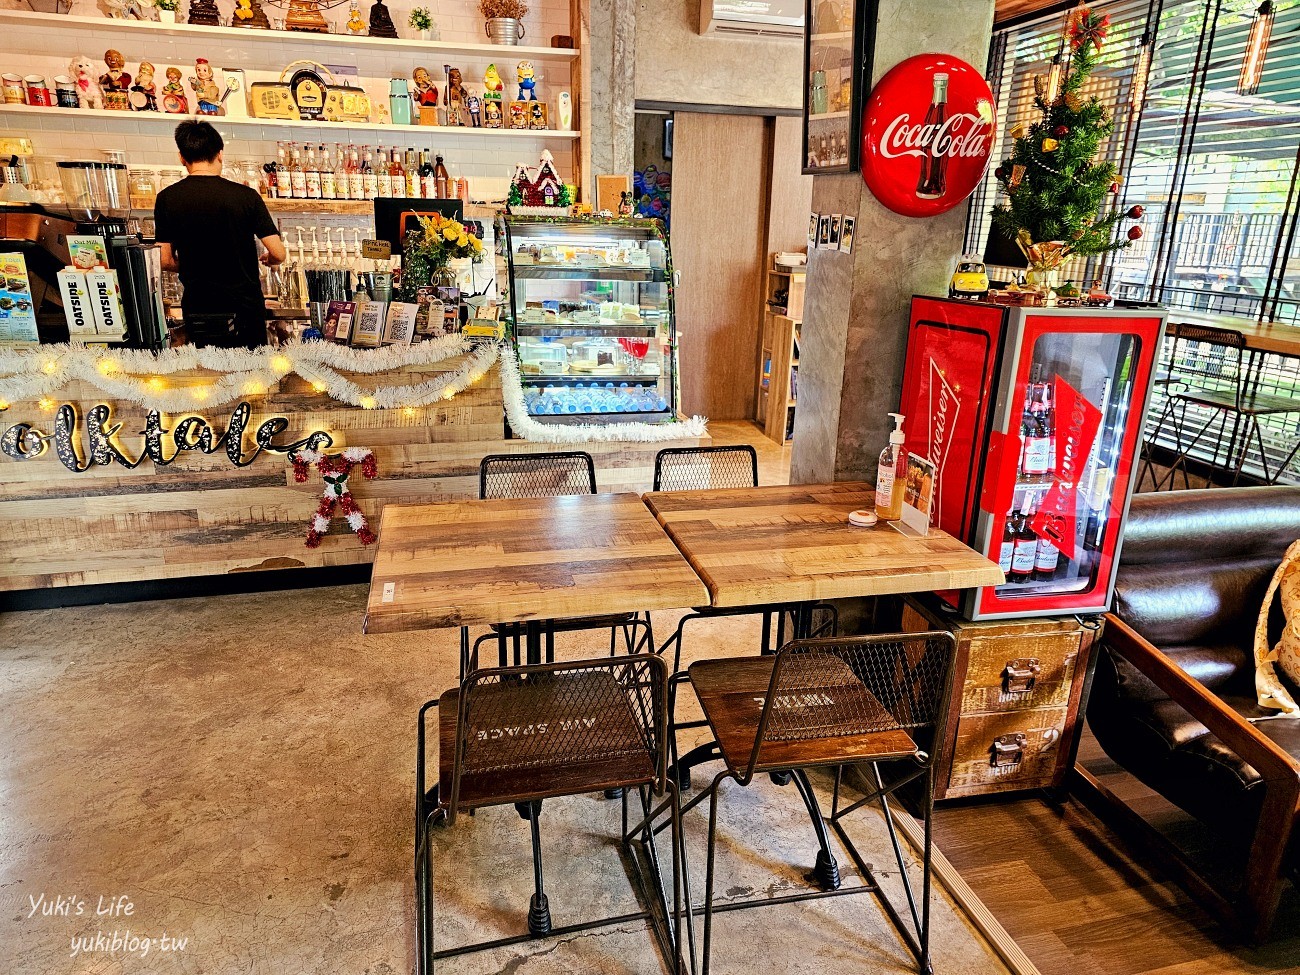 曼谷親子景點【Folktales Cafe & Bistro】古董車主題網美咖啡廳，兒童遊戲區太讚了！ - yukiblog.tw